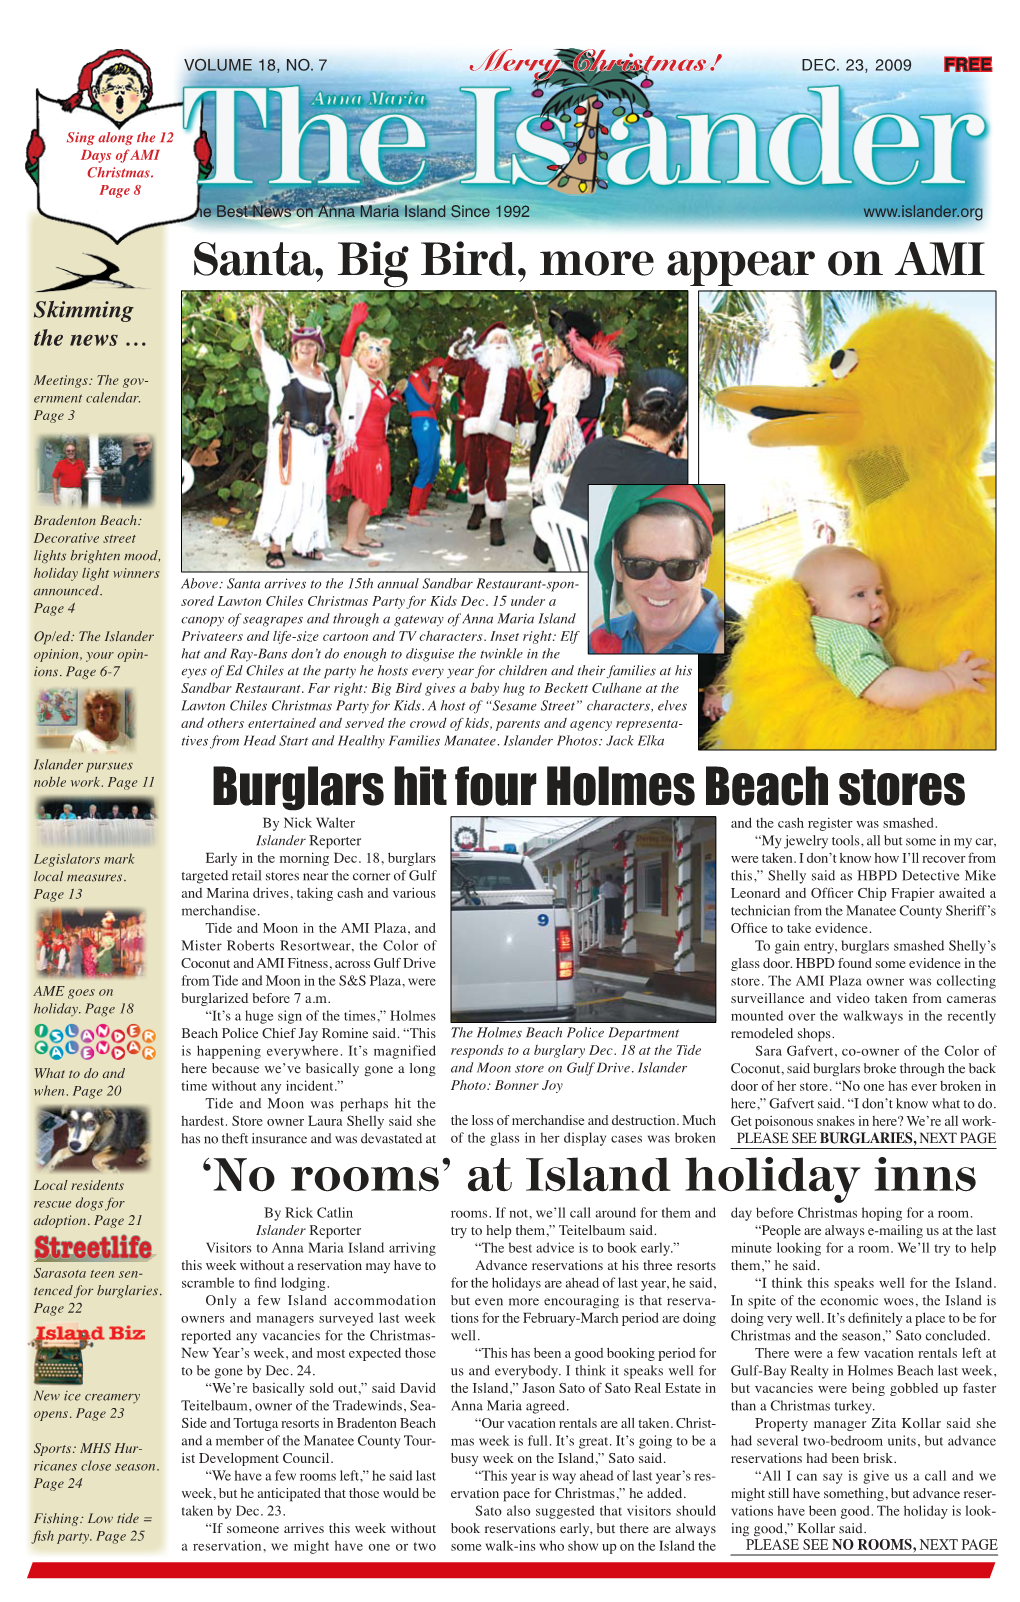 Burglars Hit Four Holmes Beach Stores 'No Rooms'